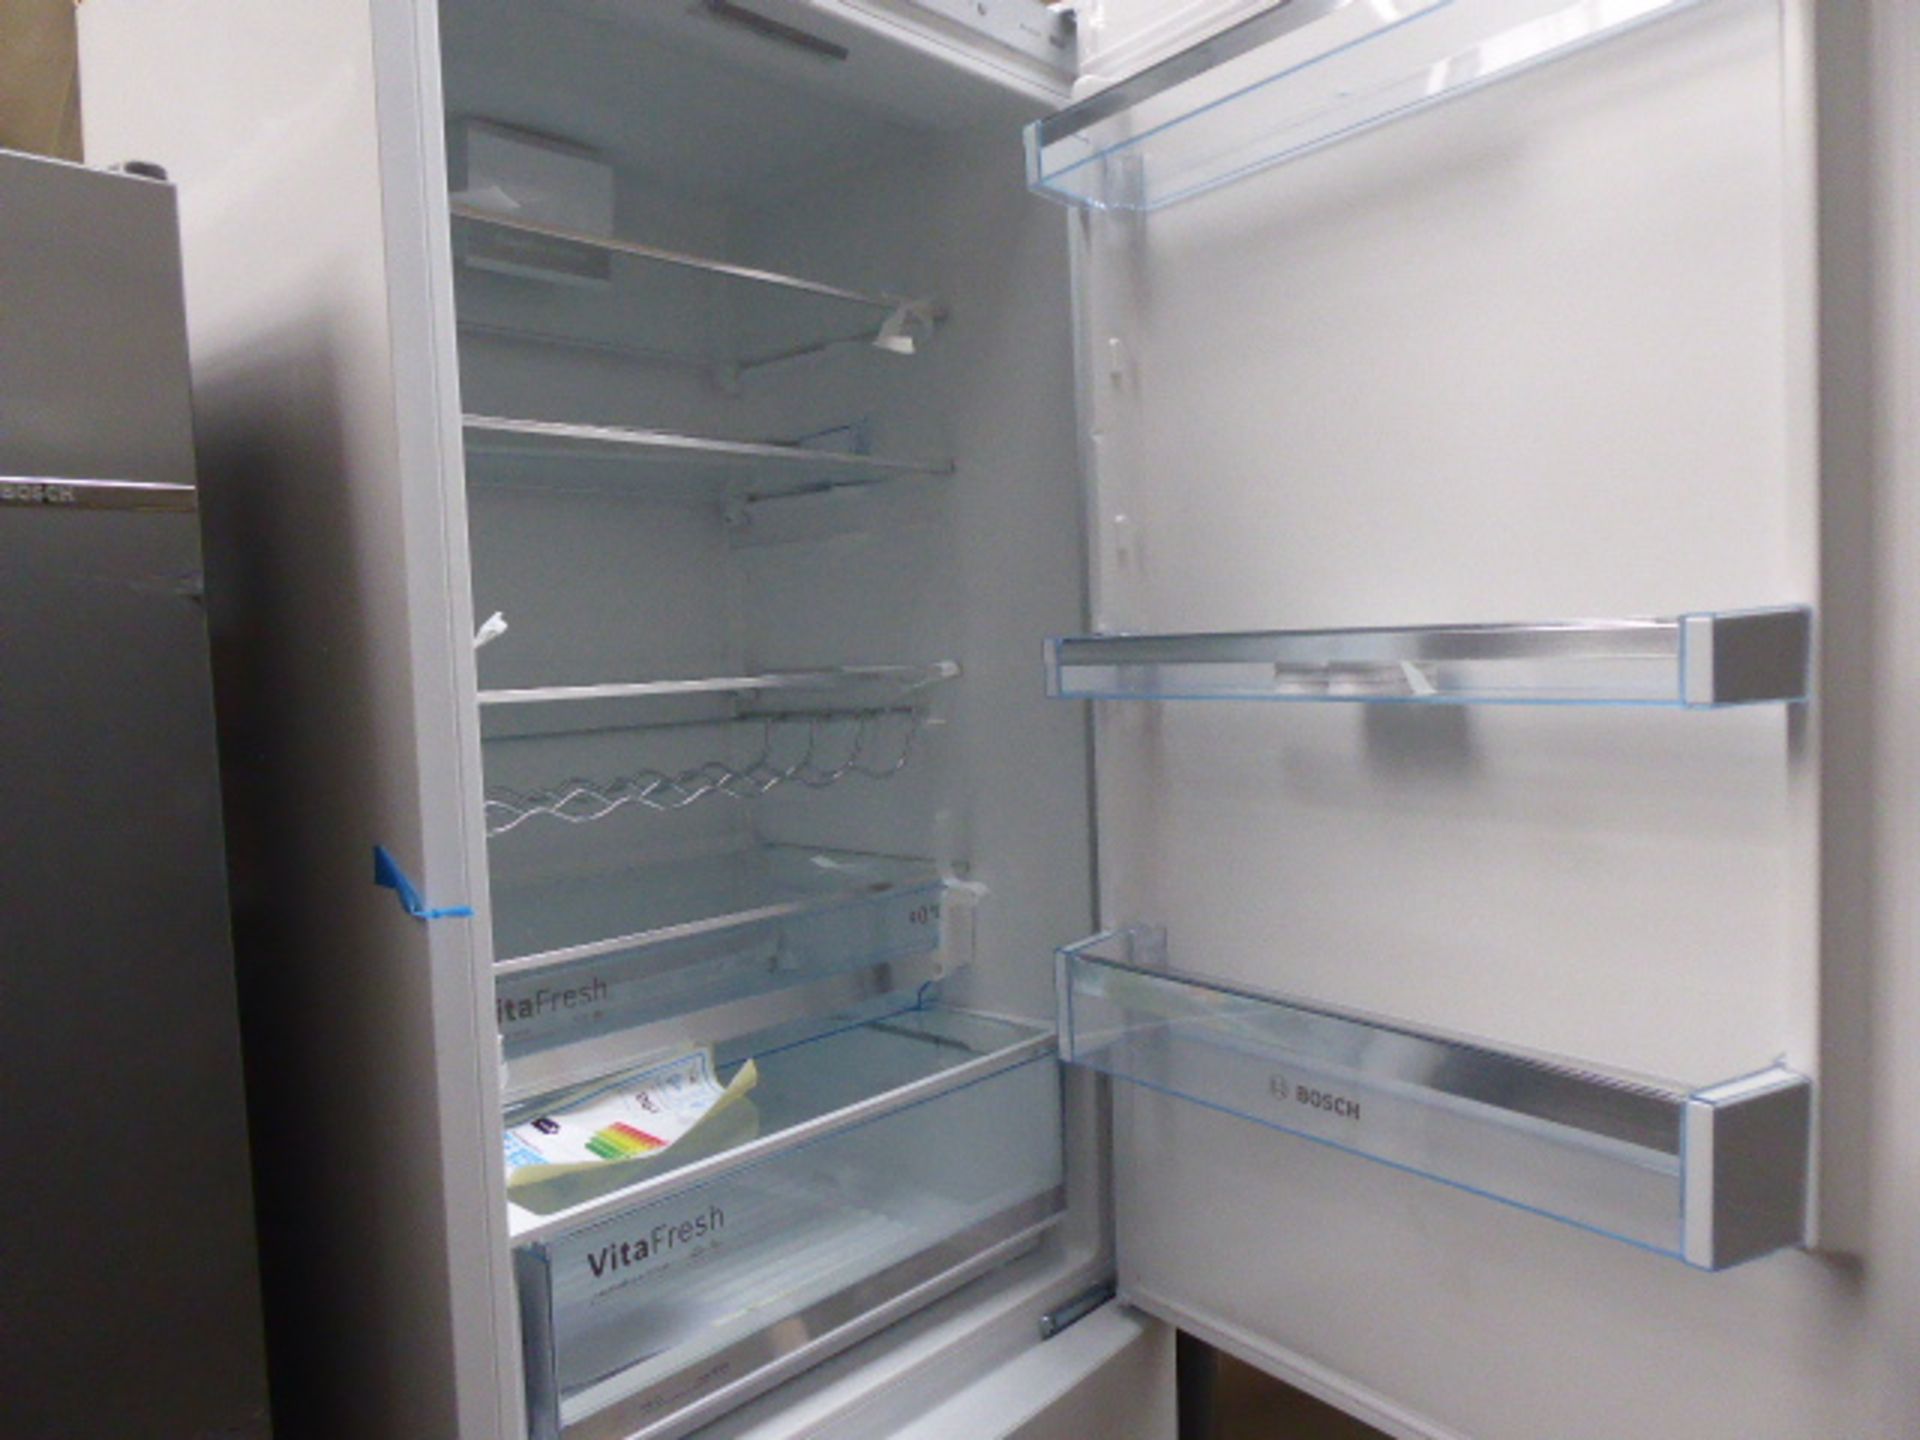 KGE49AWCAGB Bosch Free-standing fridge-freezer - Image 3 of 3